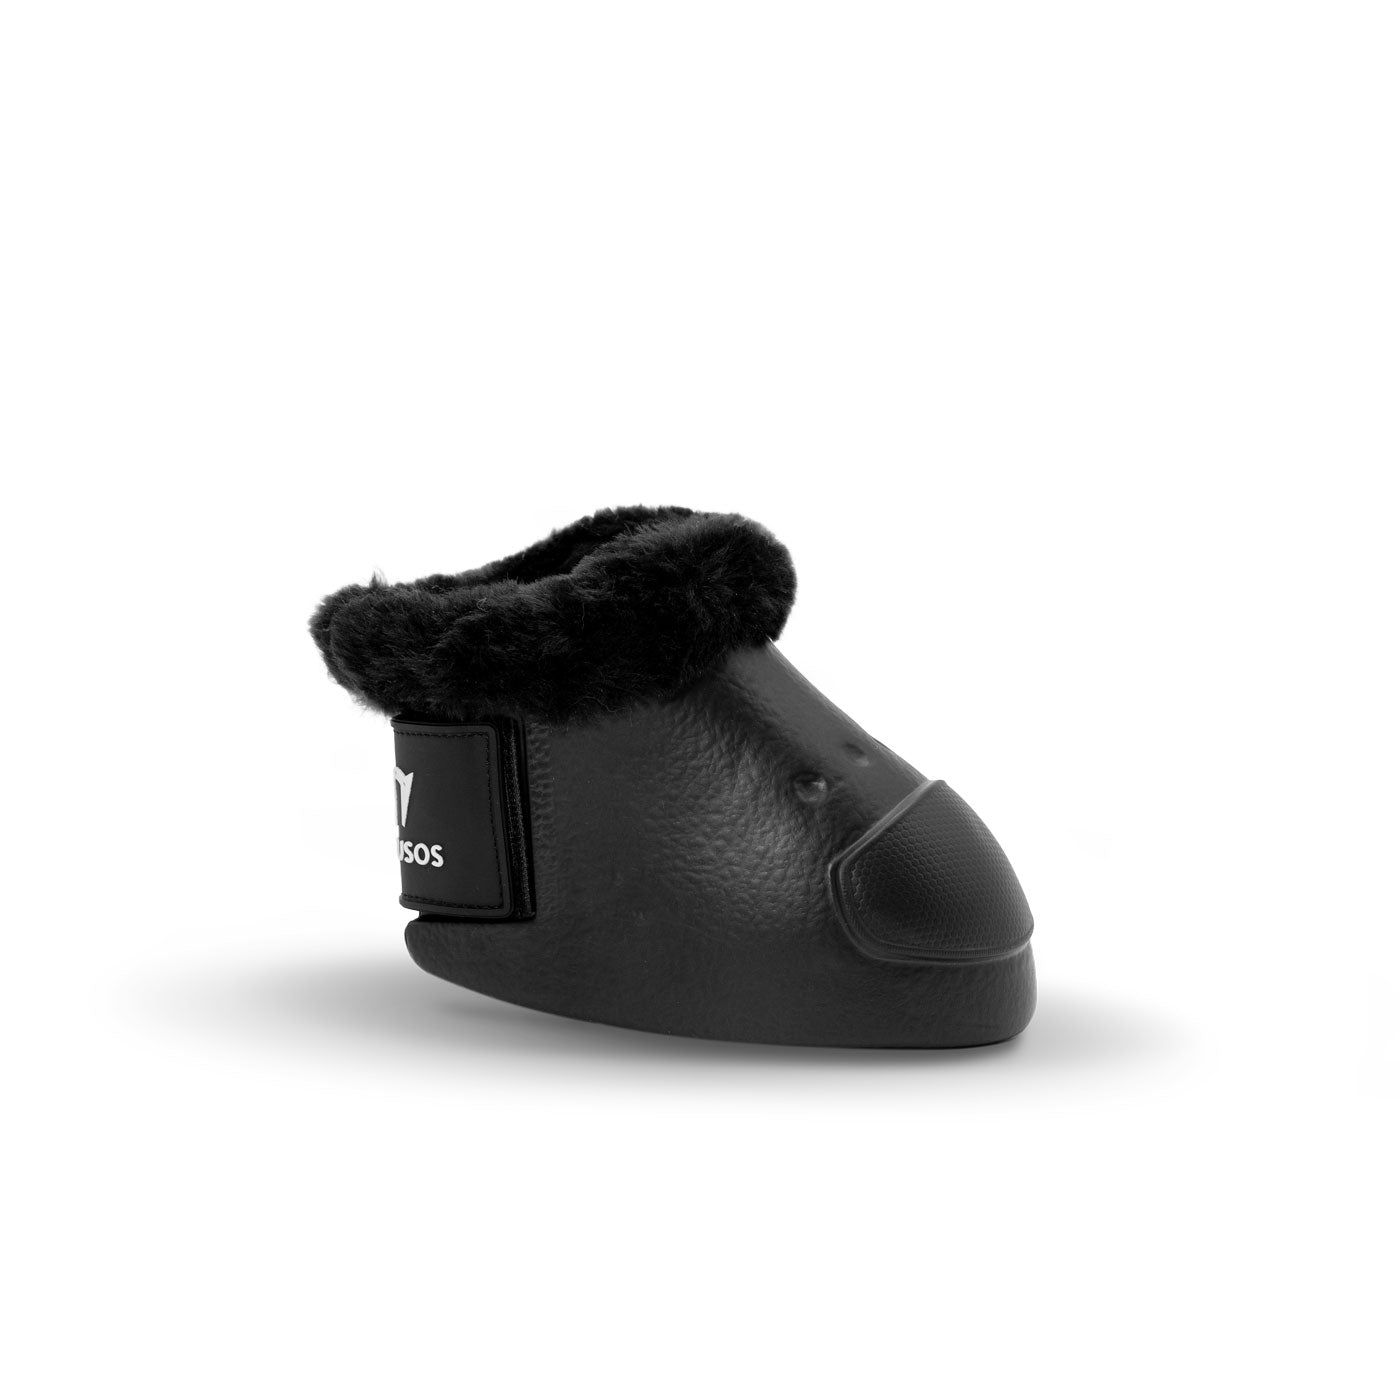 Gatusos Bell Boots Royal Synthetic Shearling, Black